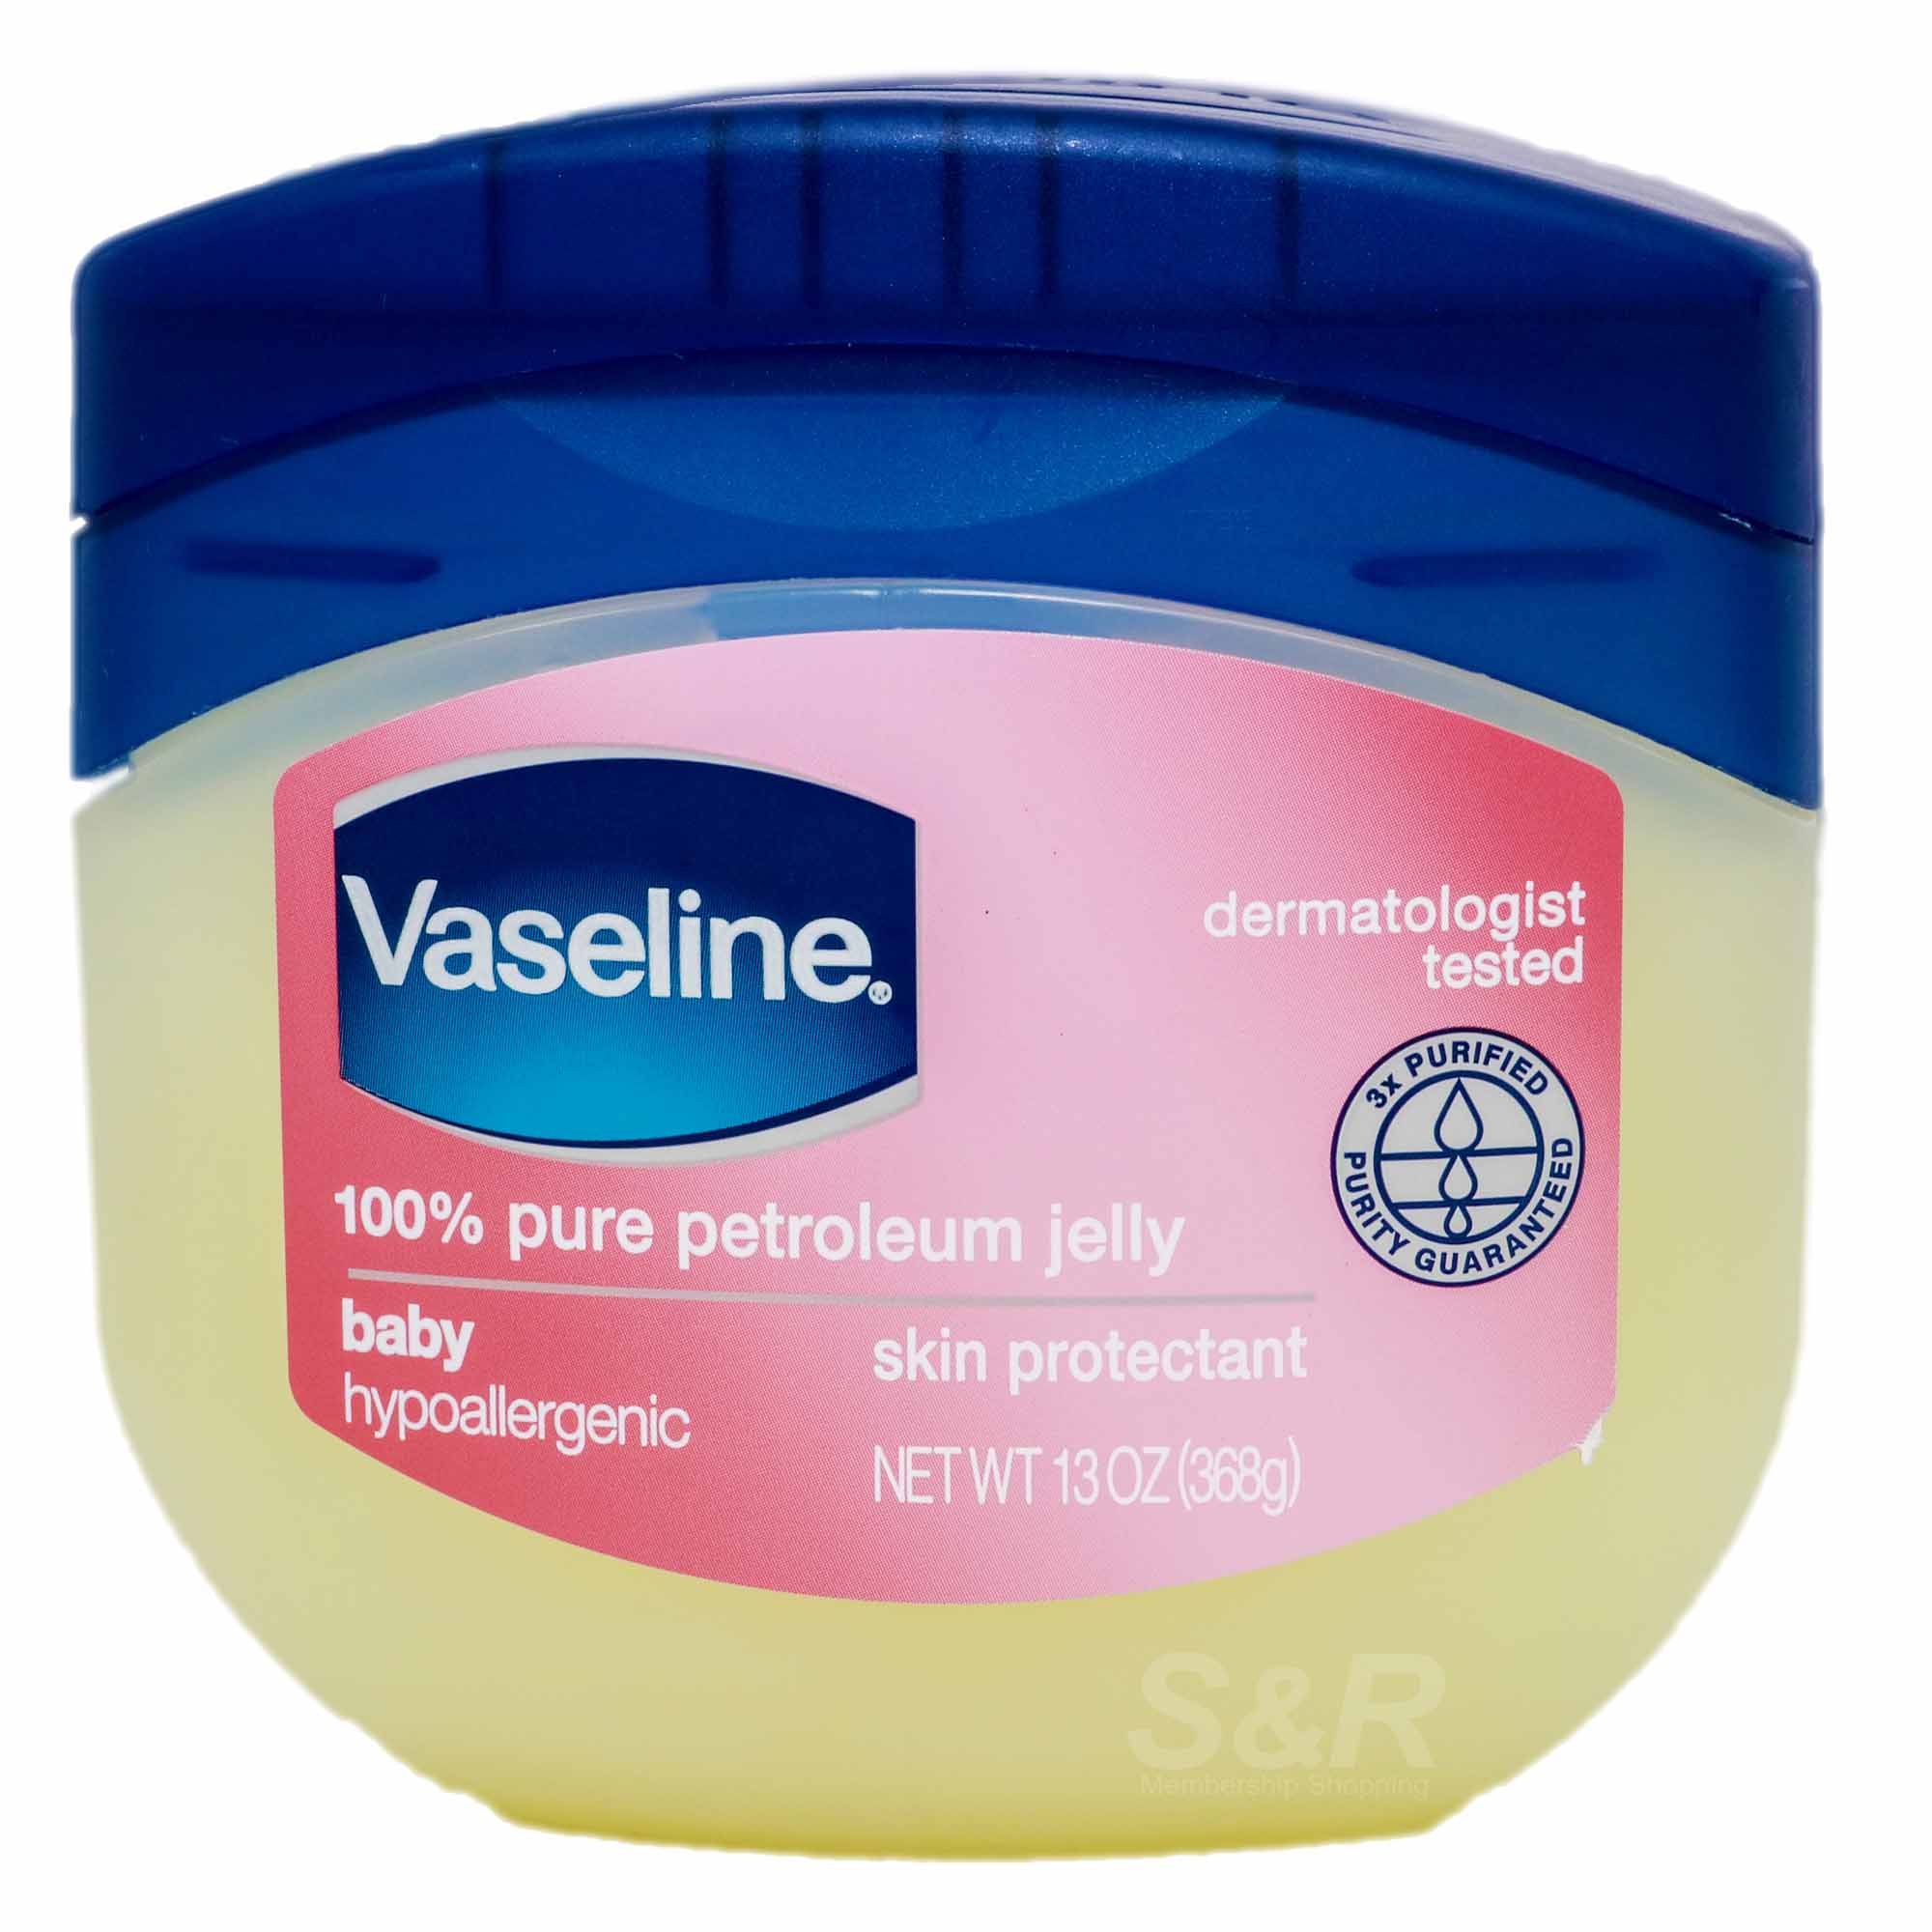 Vaseline Baby Hypoallergenic 100% Pure Petroleum Jelly 368g